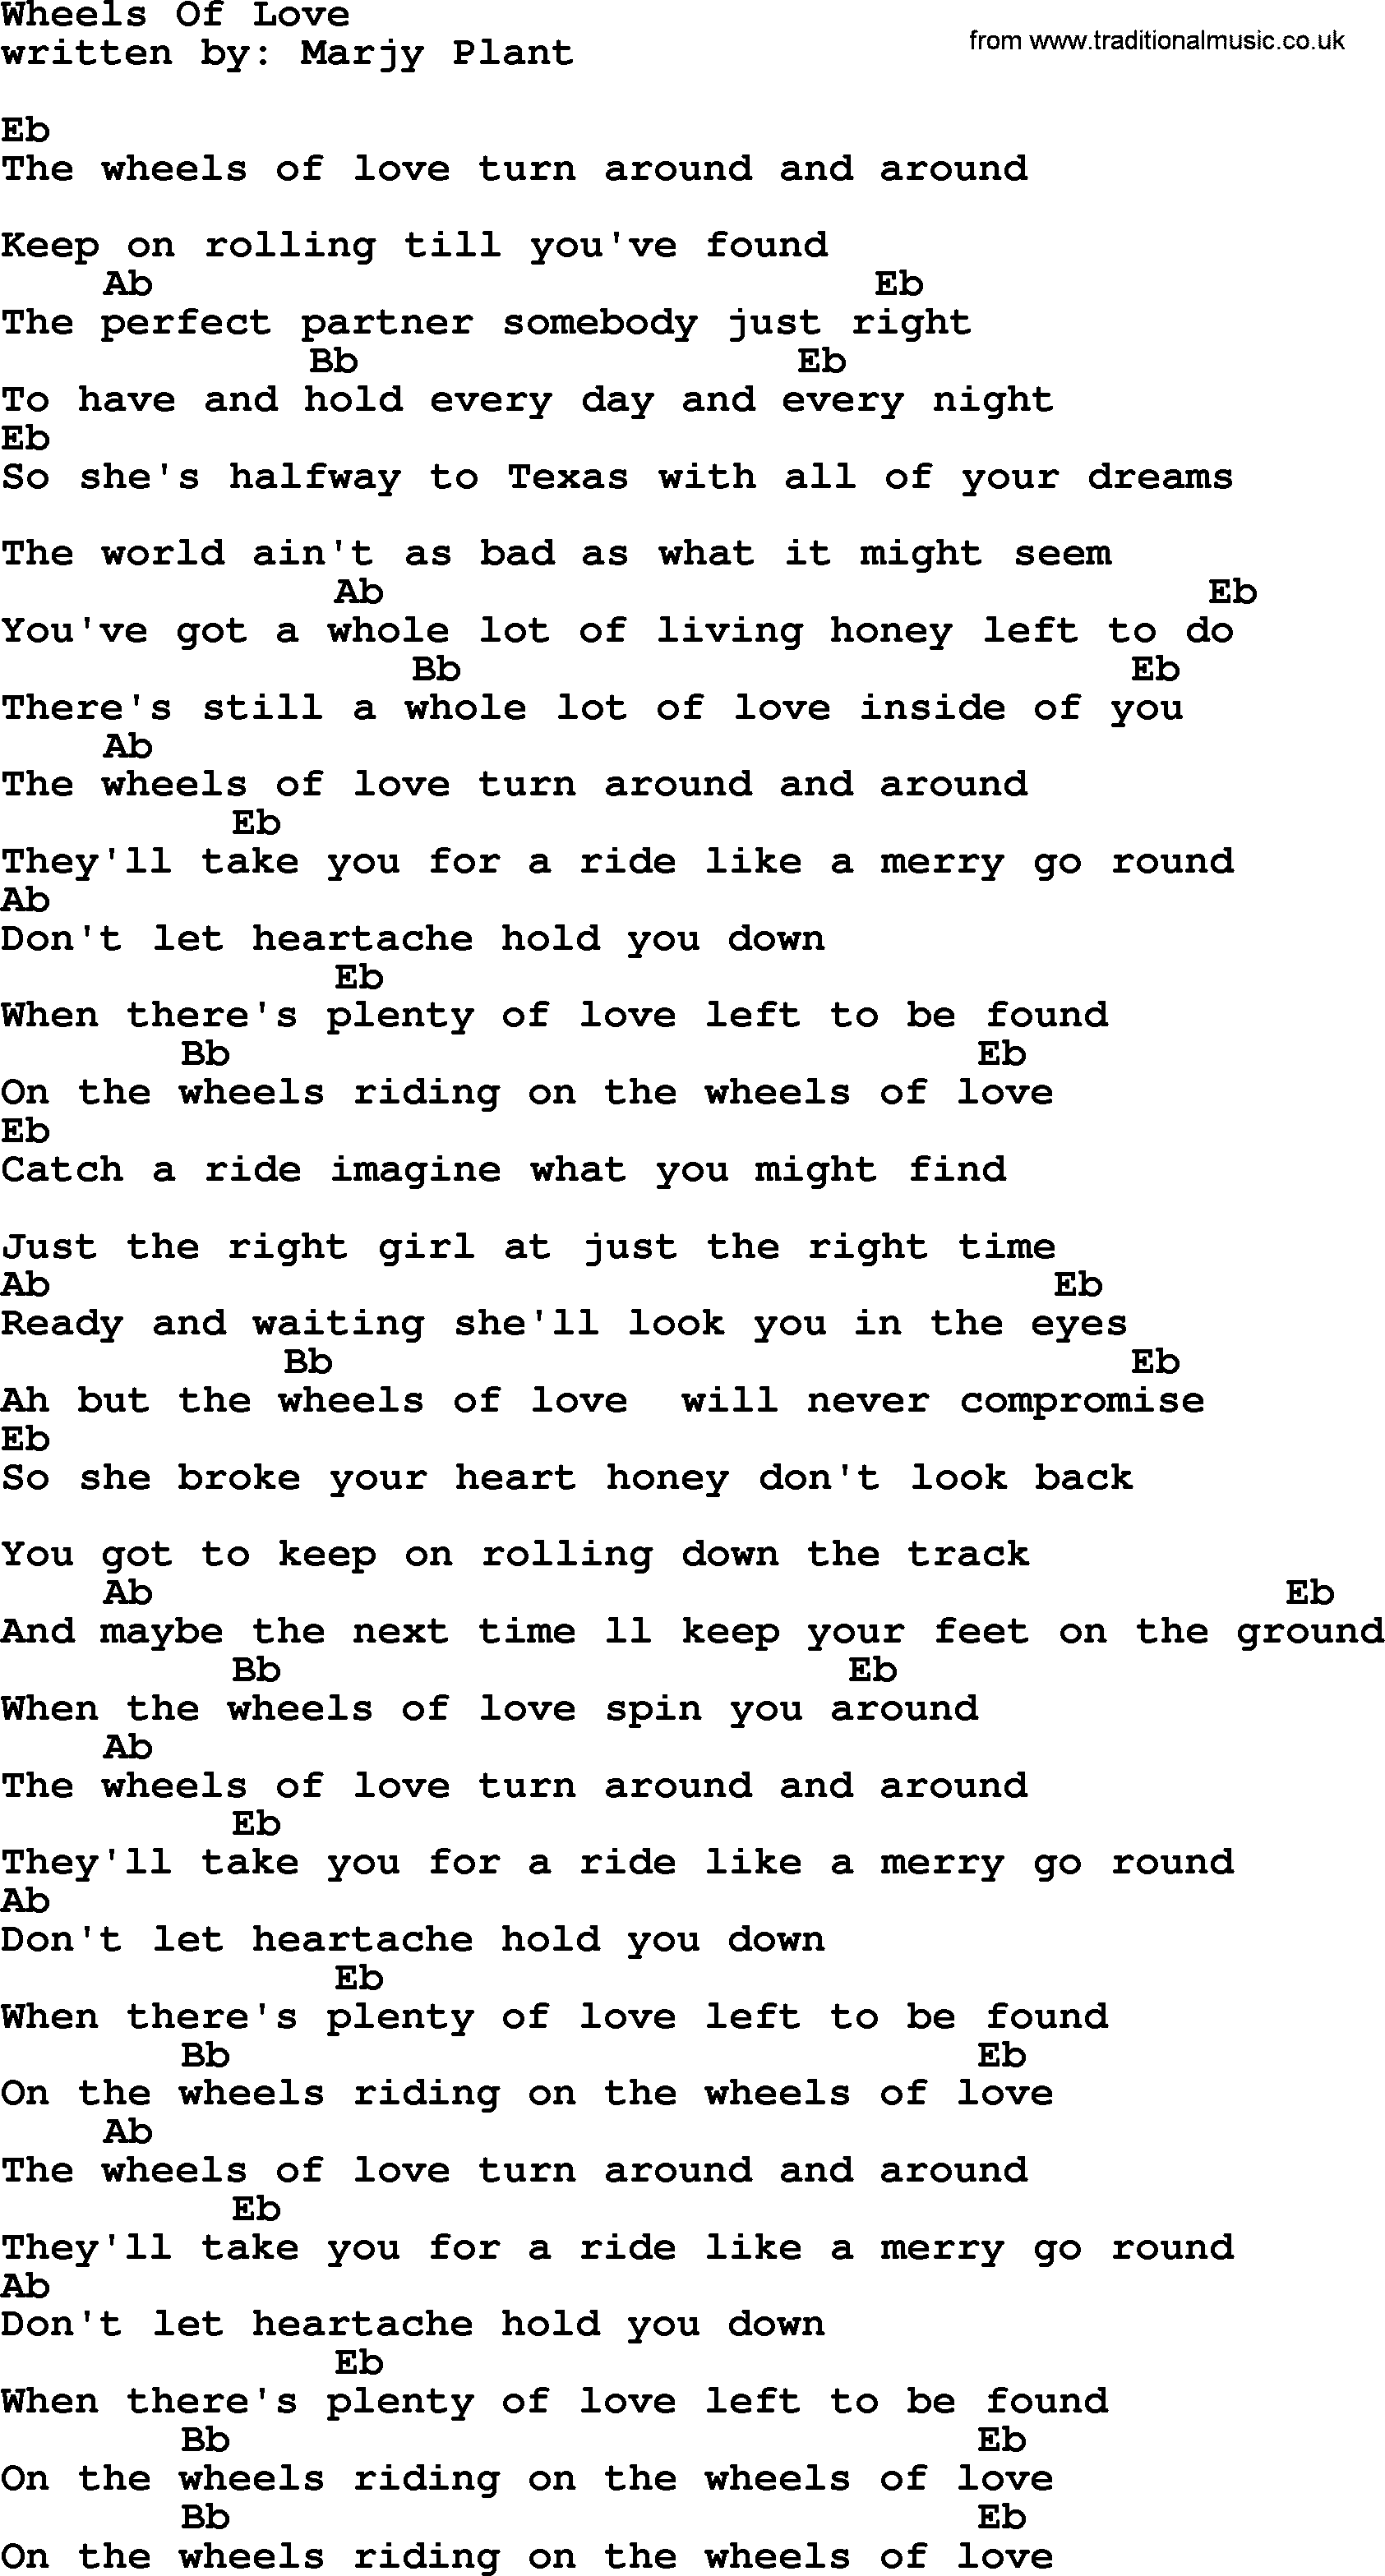 Emmylou Harris song: Wheels Of Love lyrics and chords